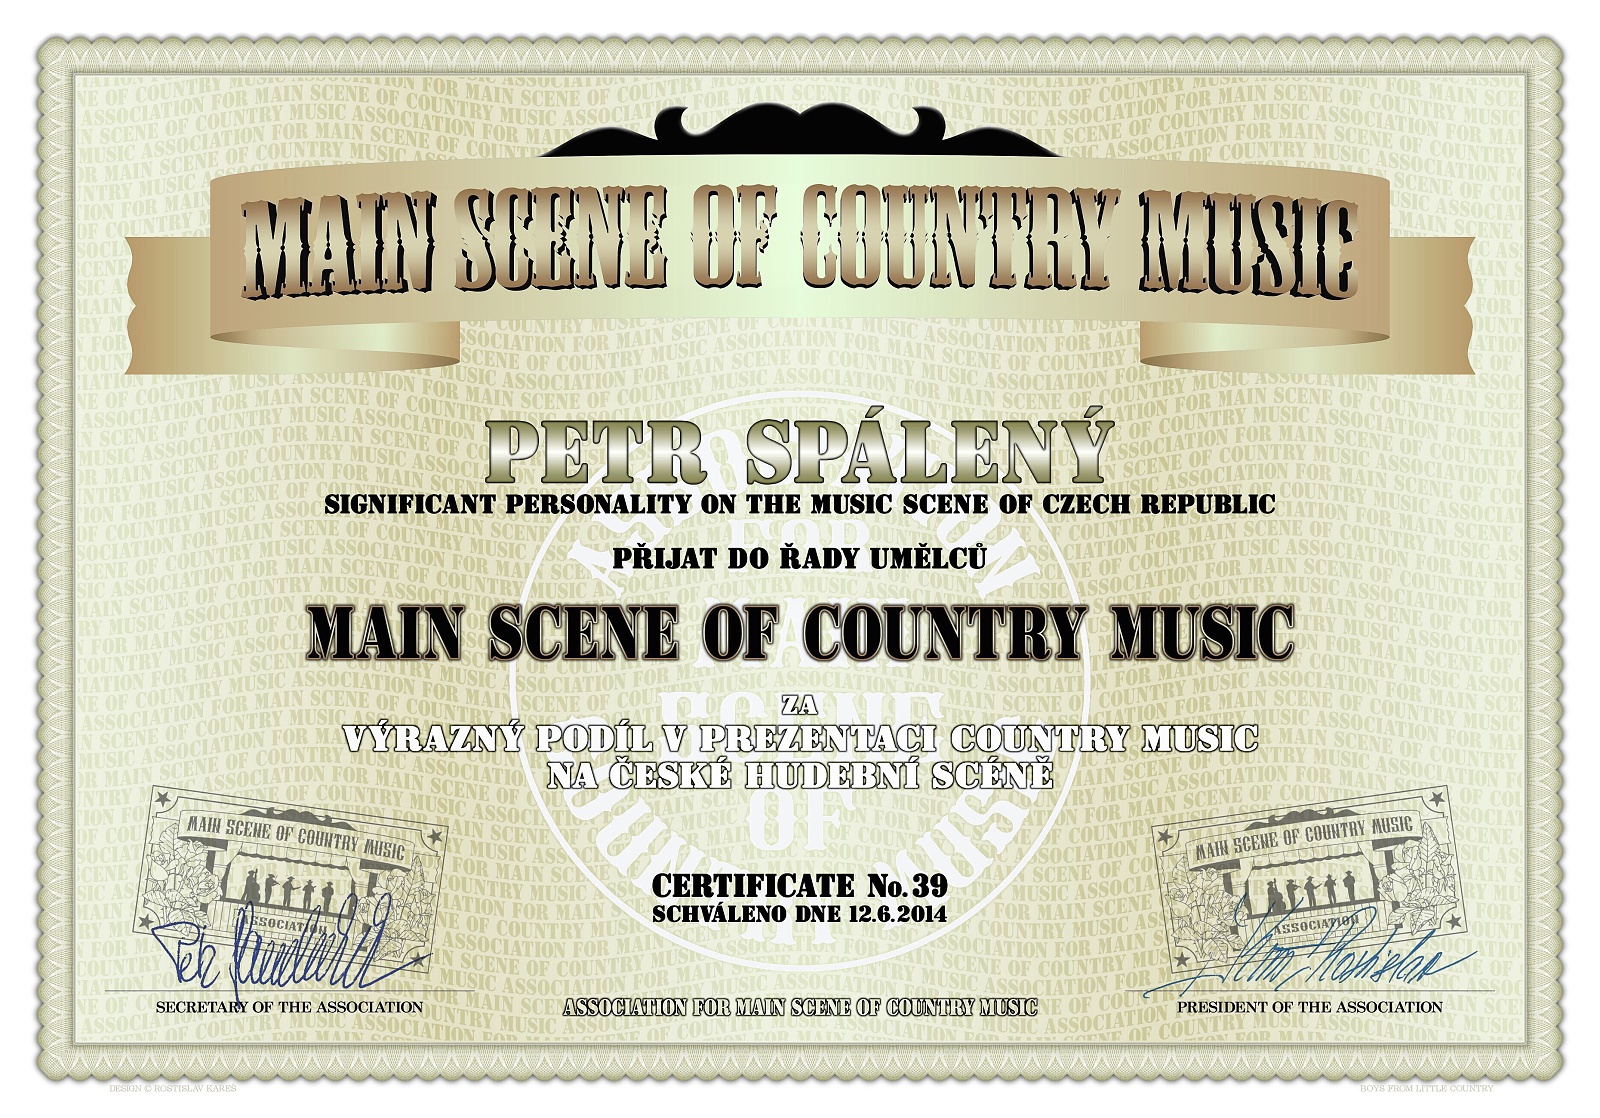 CE 39 - Main Scene of Country Music